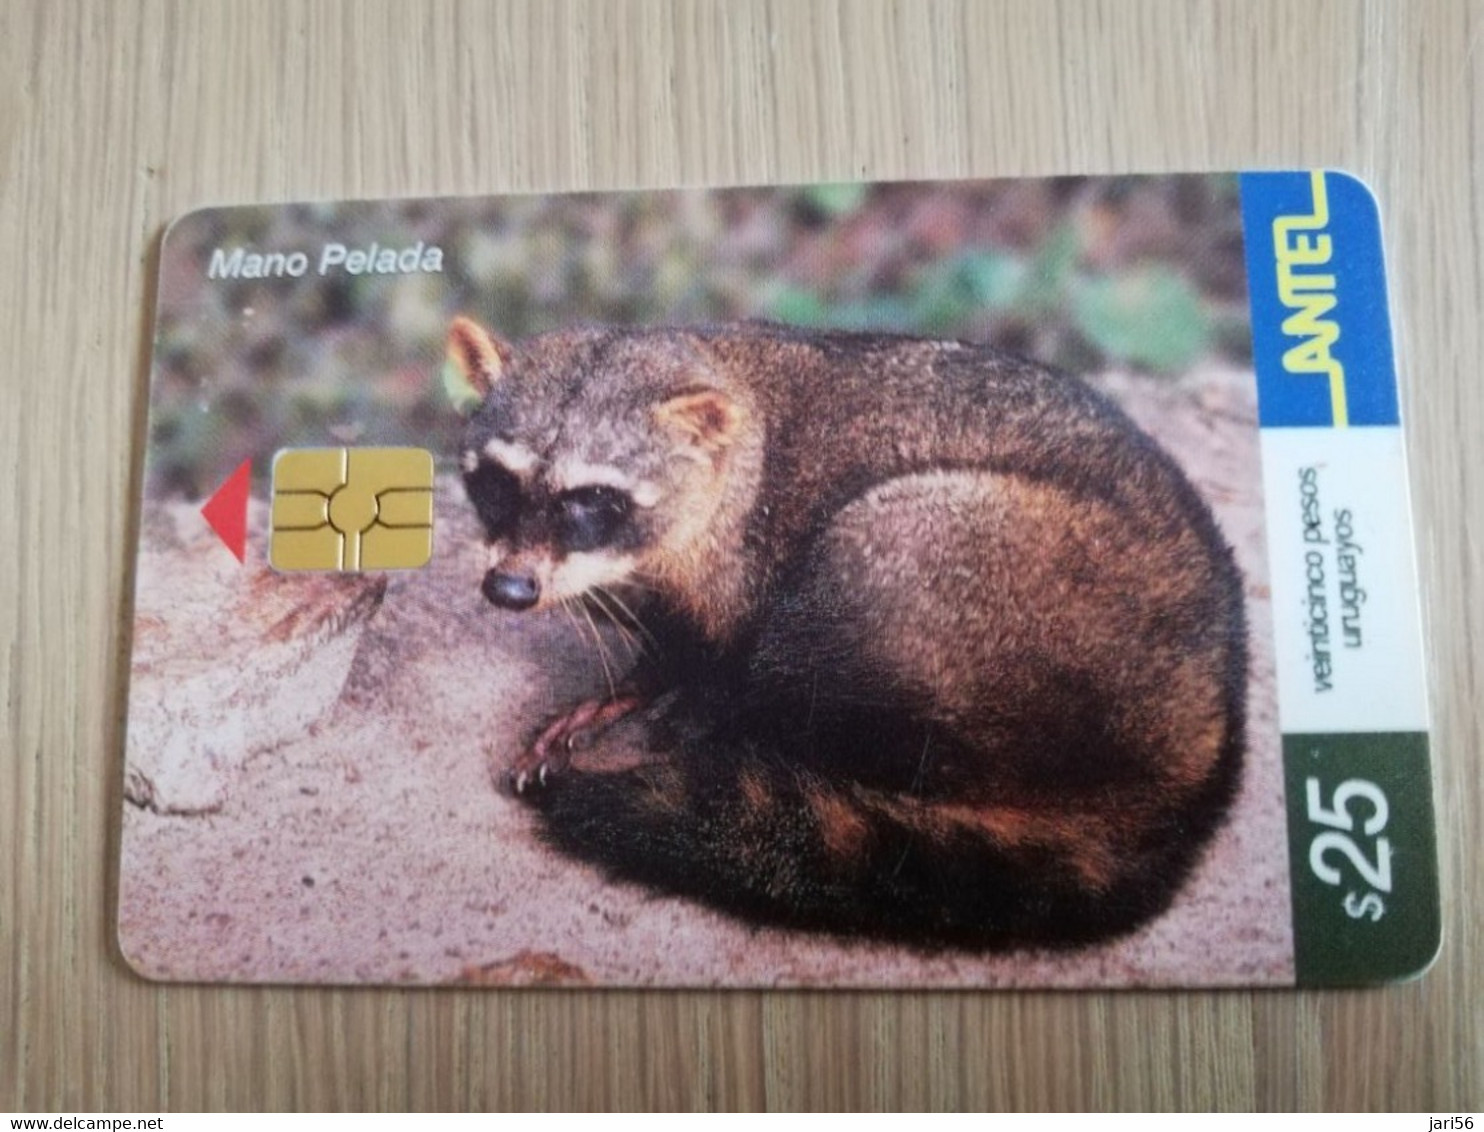 URUGUAY CHIPCARD  ANIMAL    $25   MANO PELADA           Nice Used Card    **4554** - Uruguay